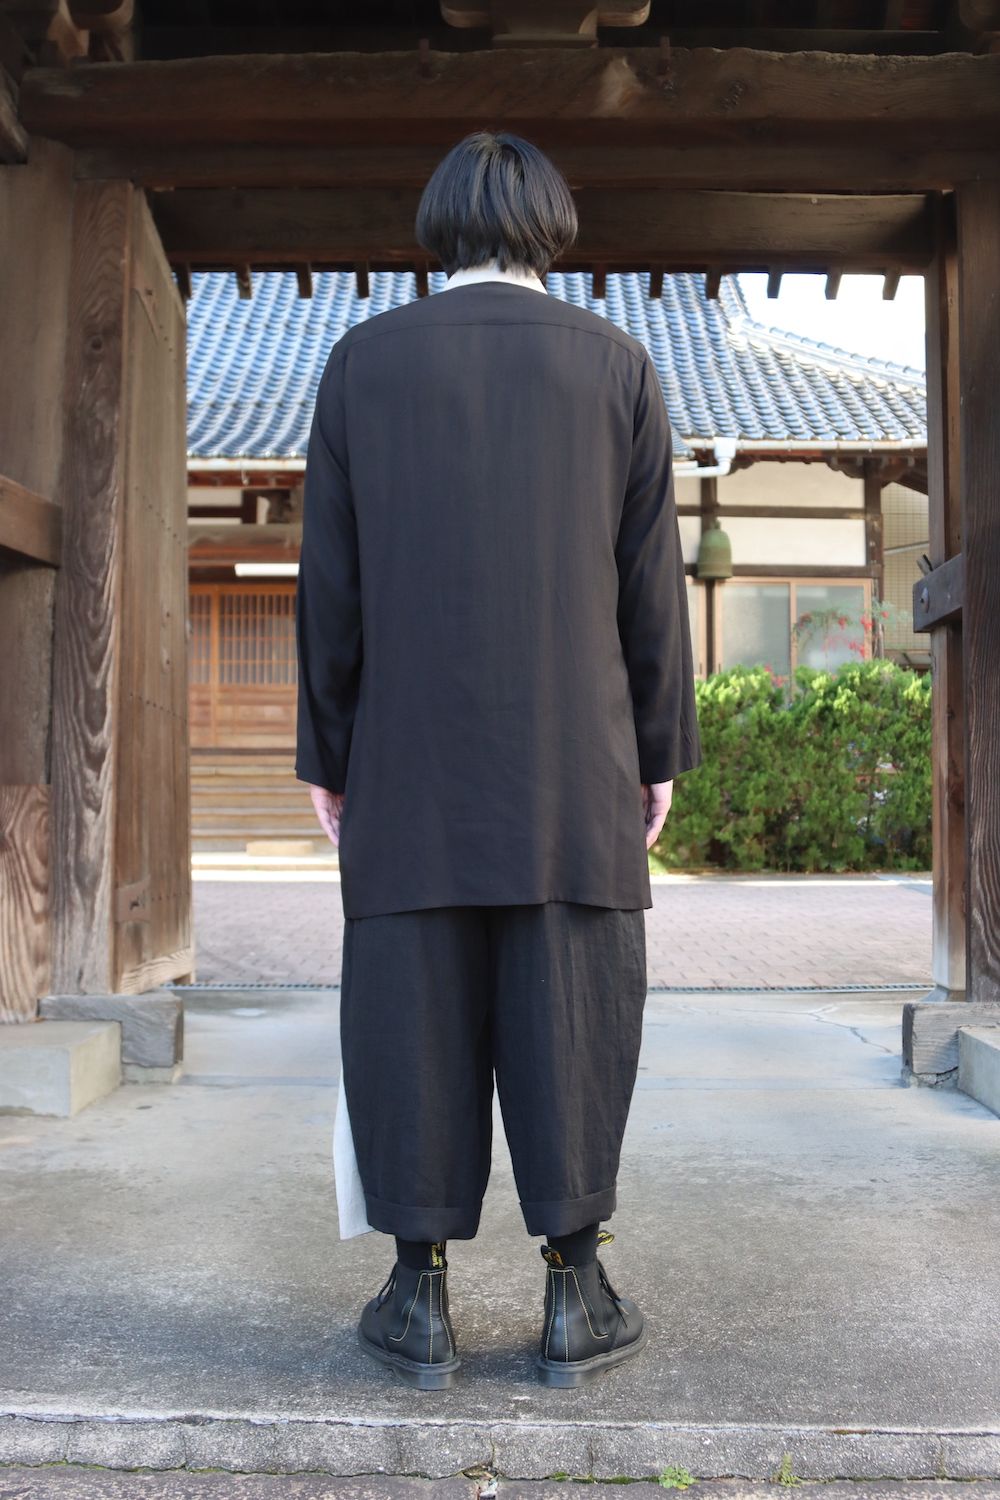 Yohji Yamamoto N-スペアカラー付きシャツ(HG-B57-216) style.2022.1.8